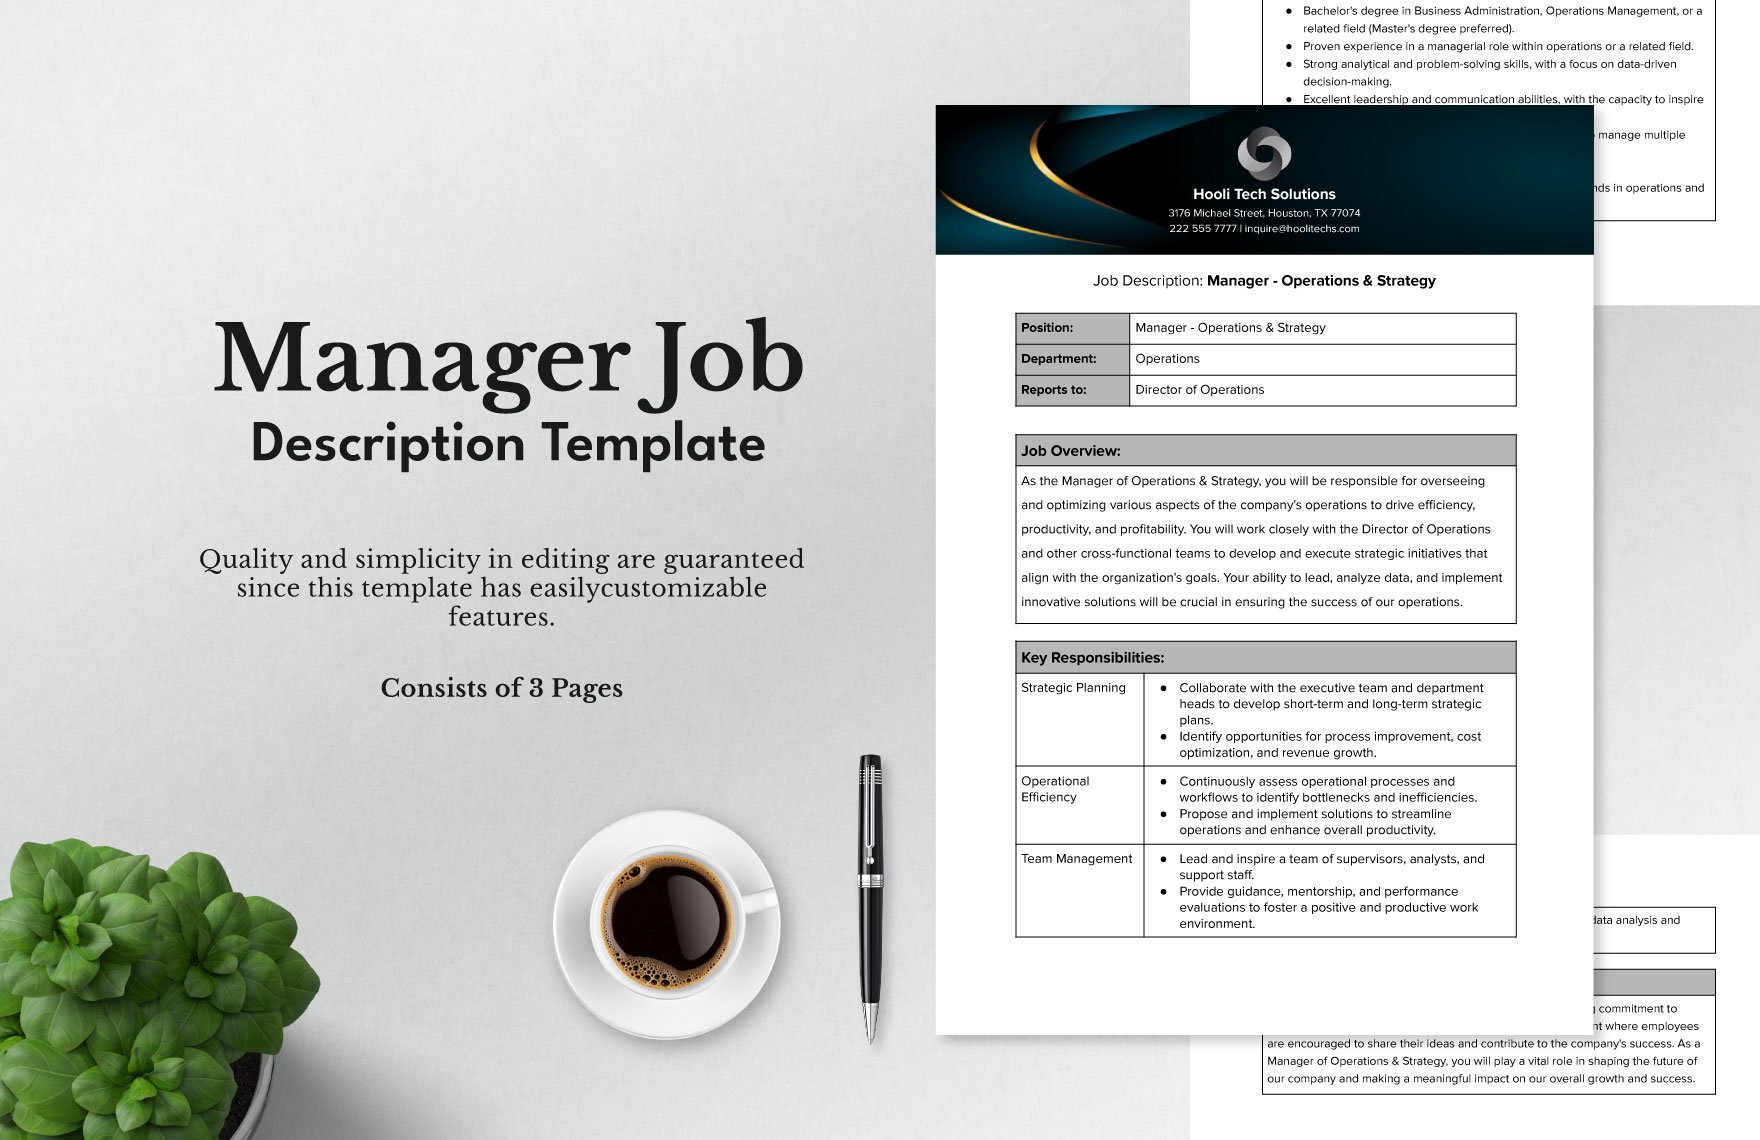 Manager Job Description